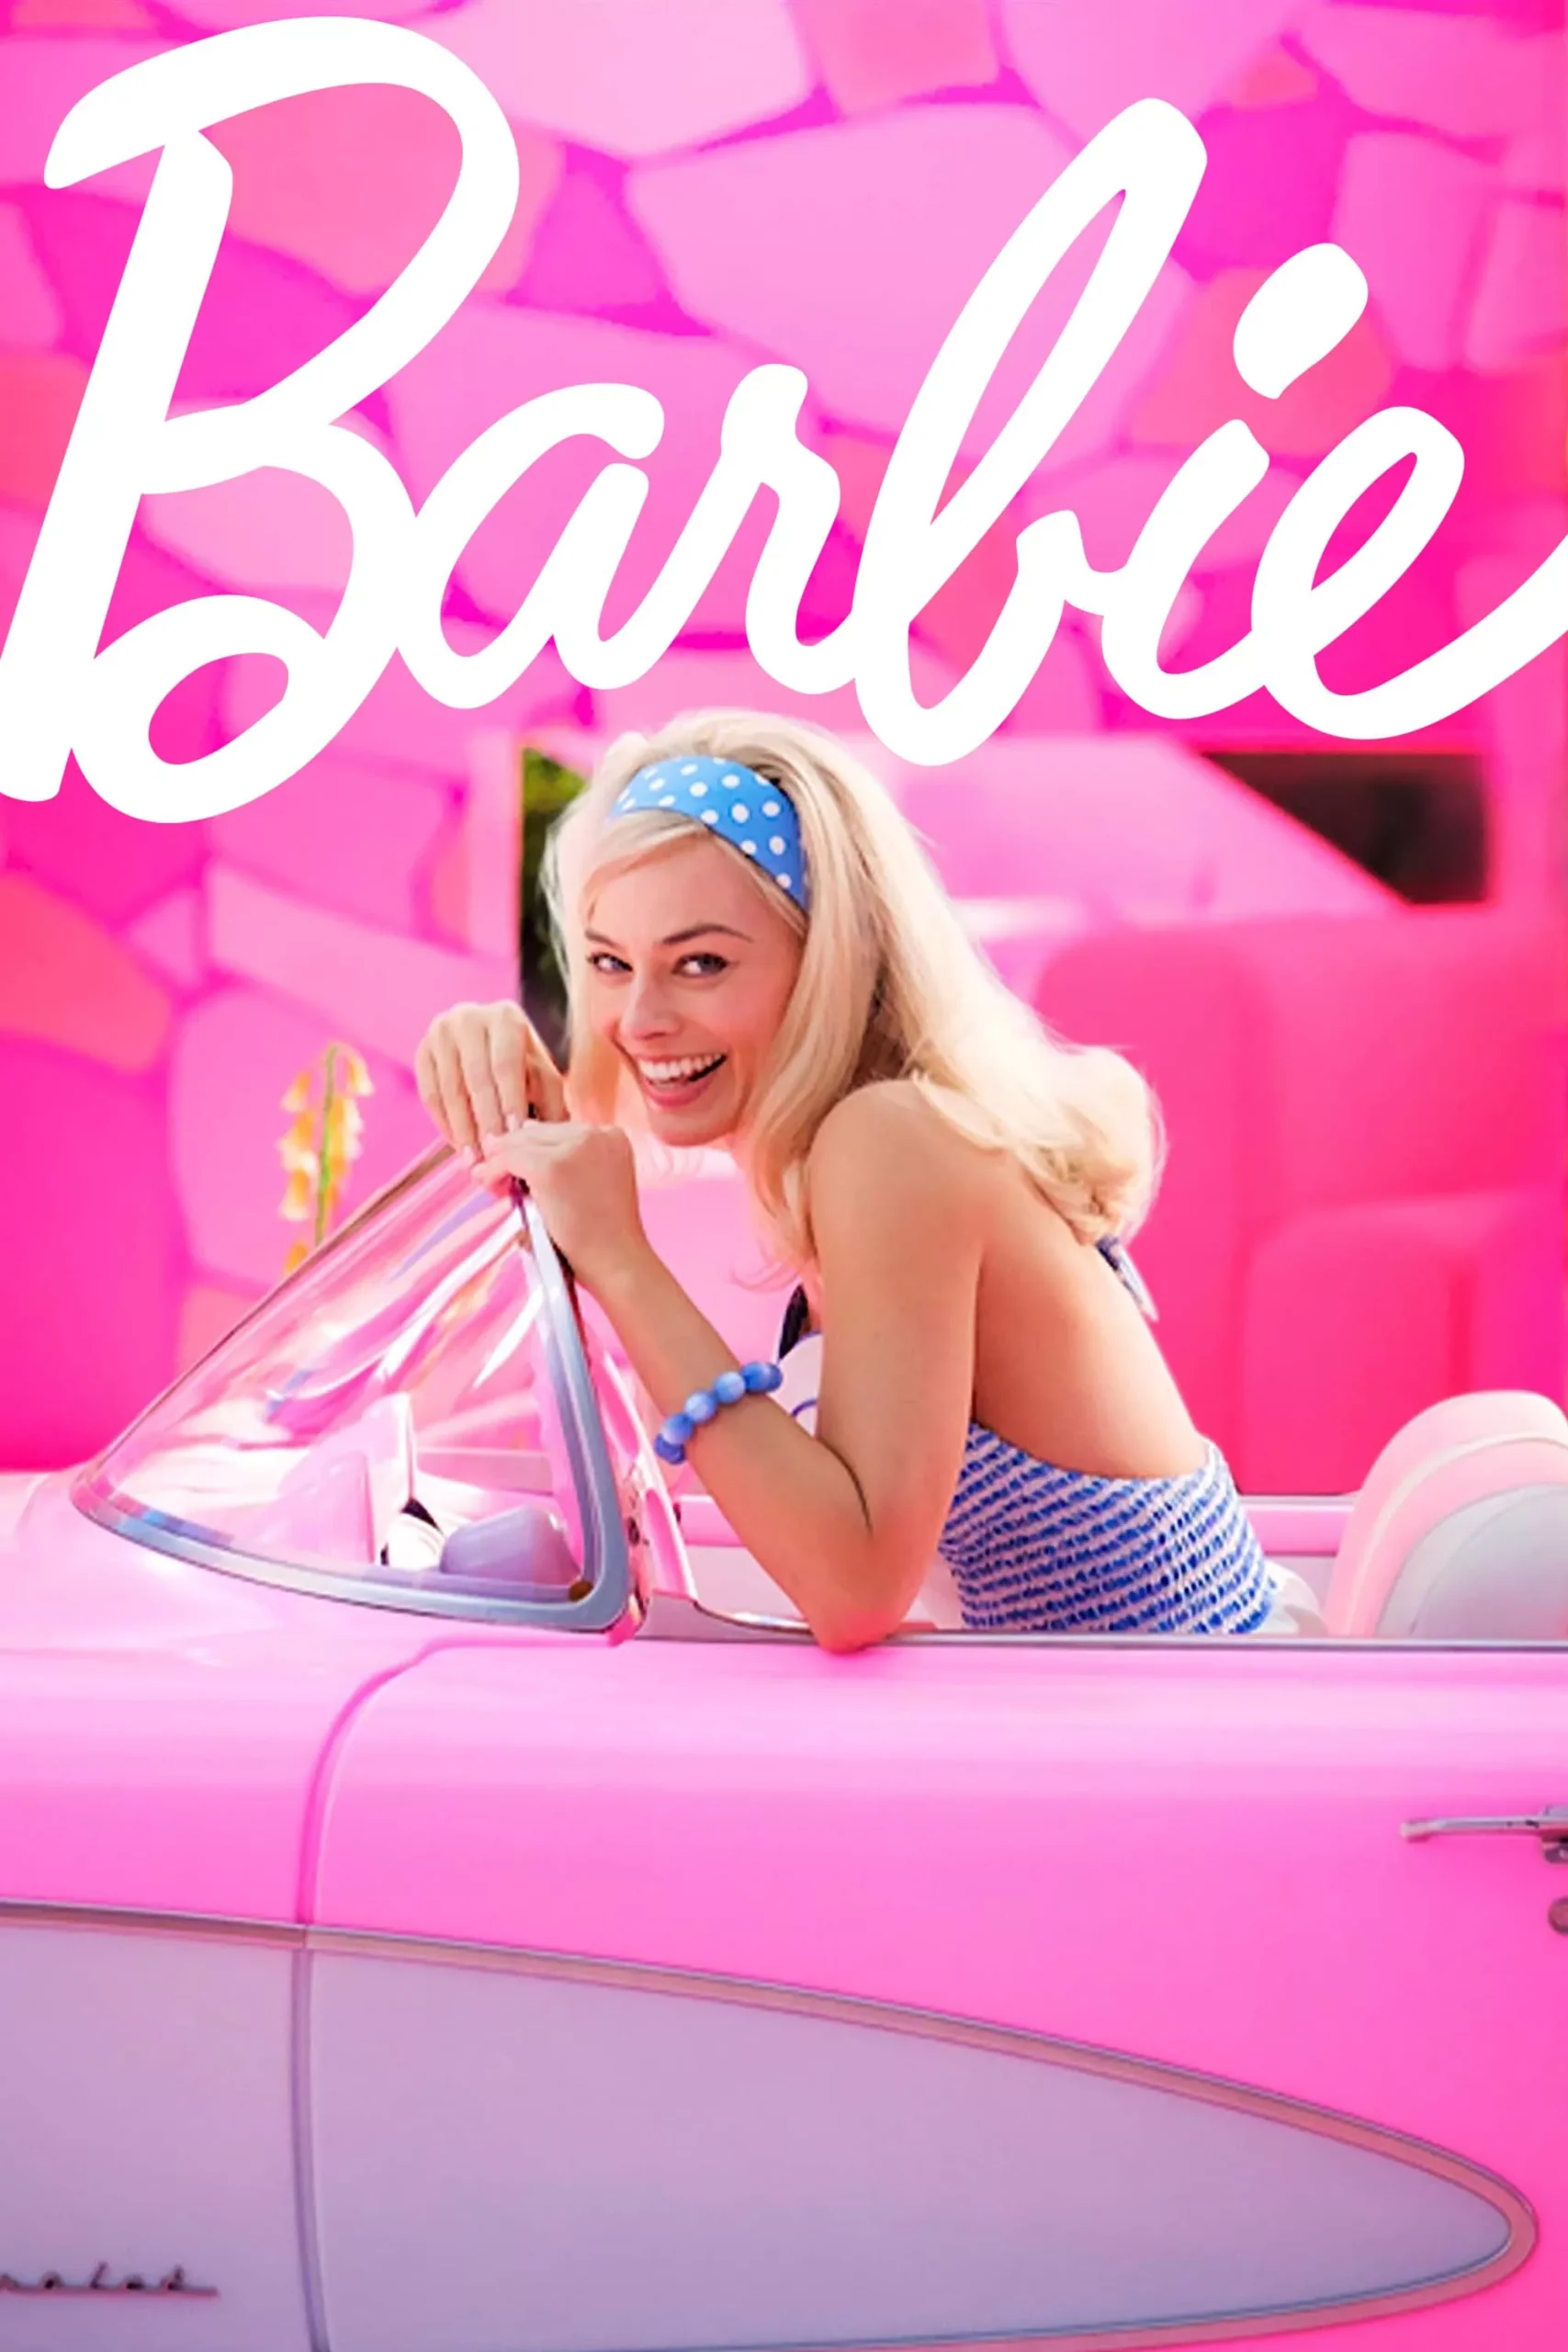 Teaser-Trailer Από Το "Barbie"